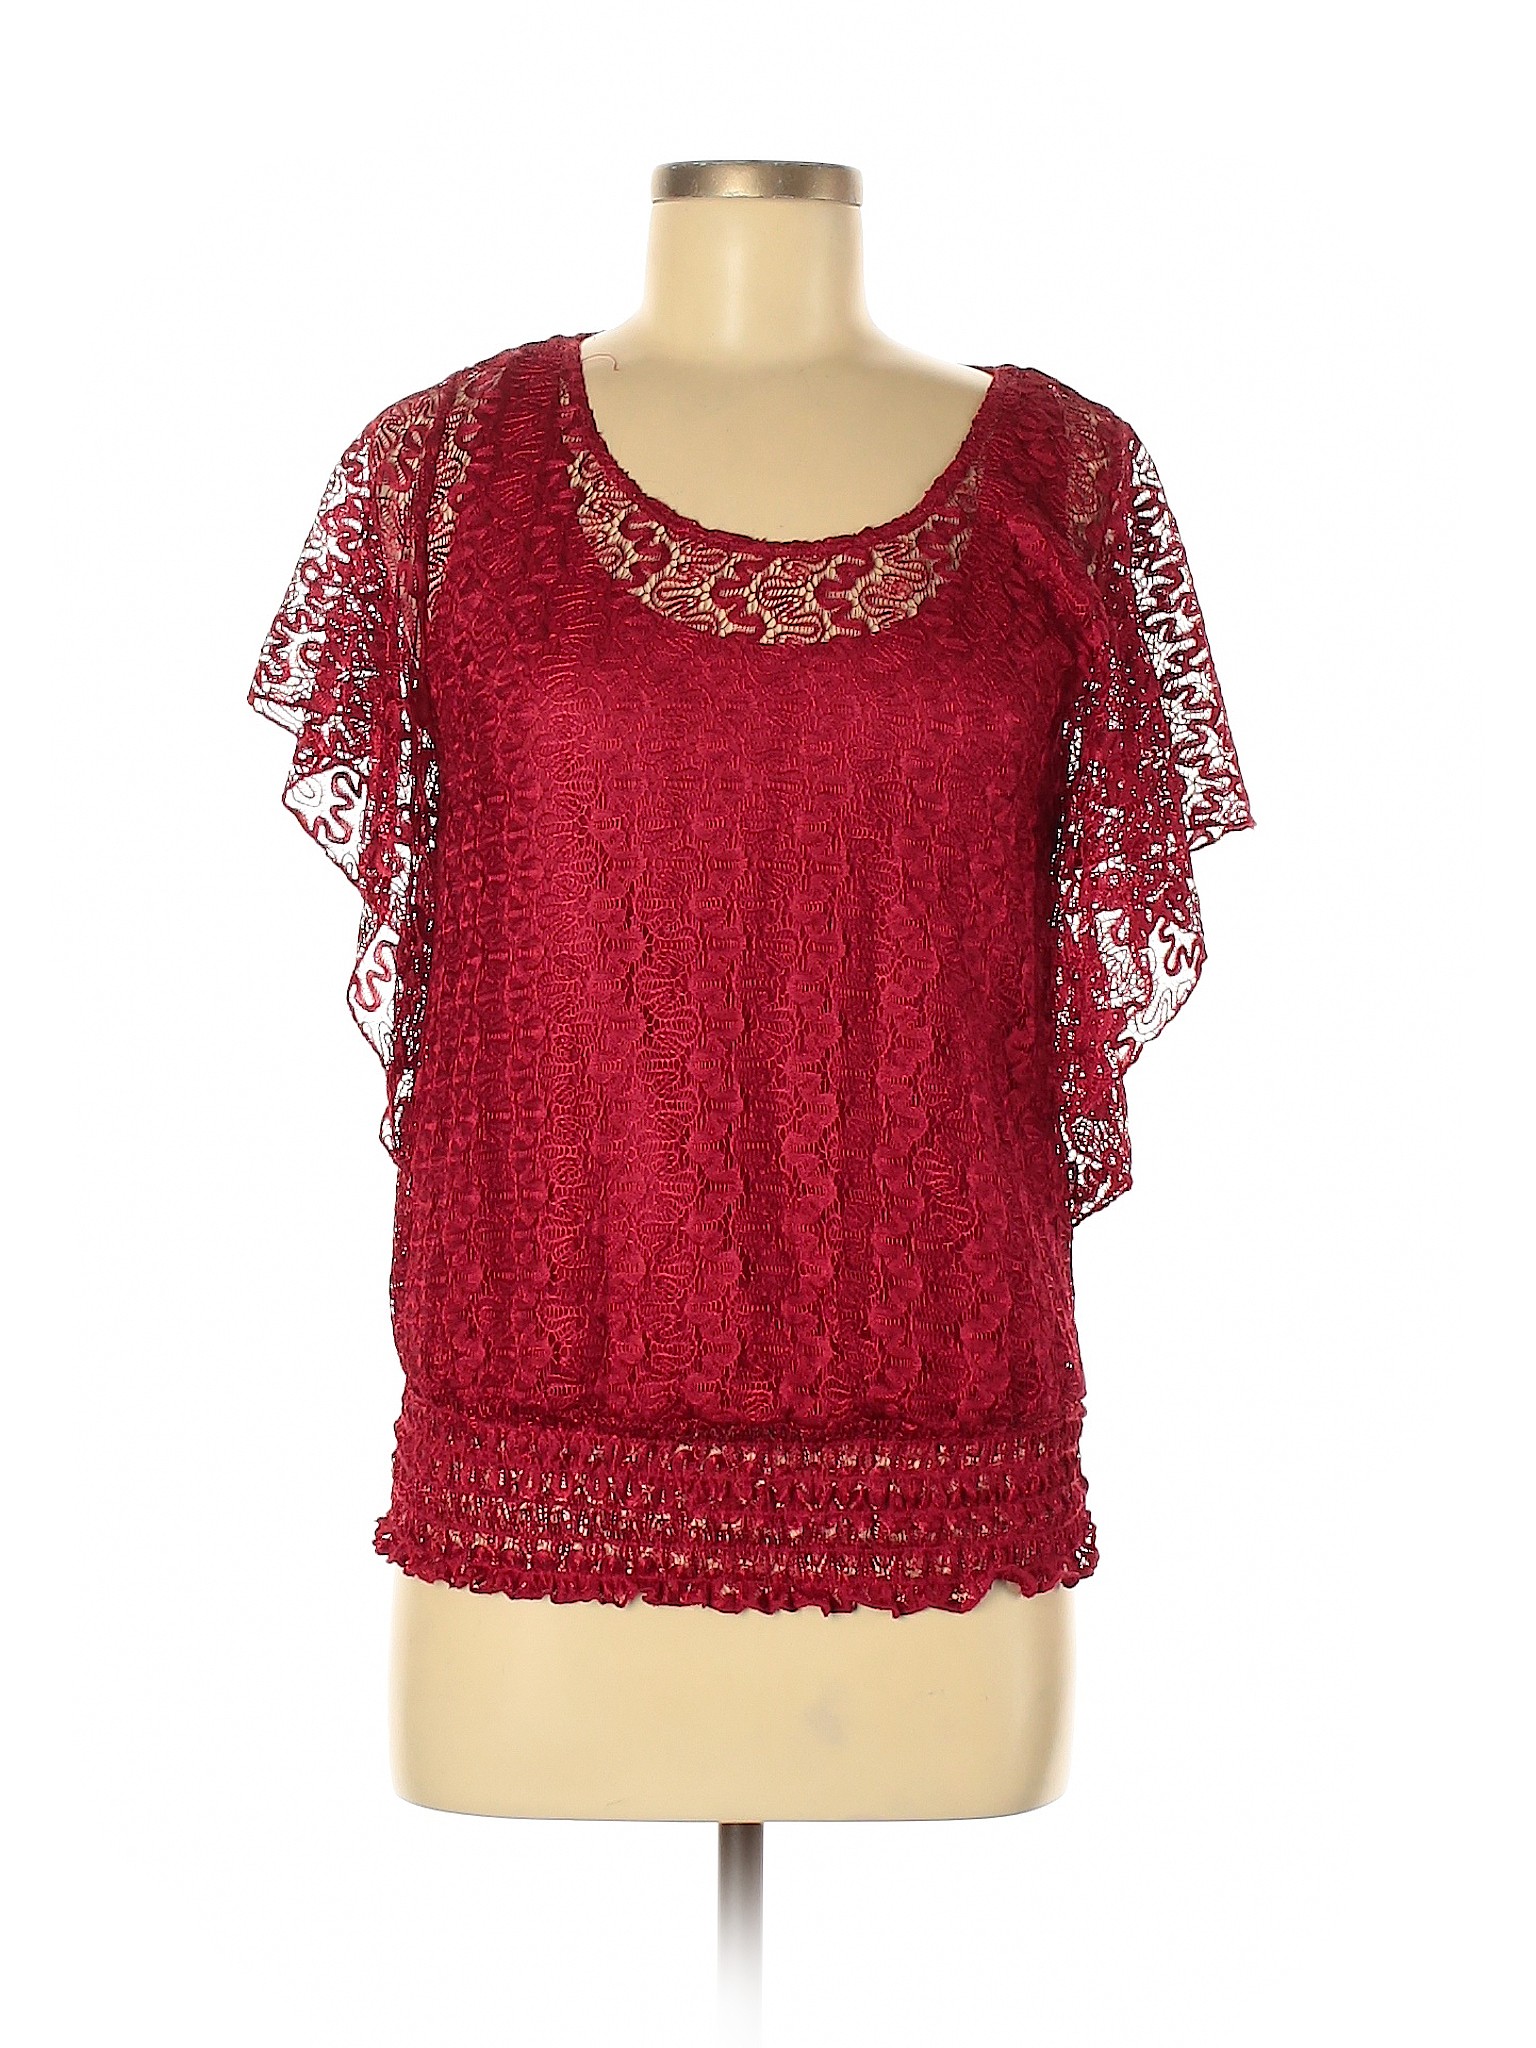 Lavish Women Red Short Sleeve Blouse M | eBay